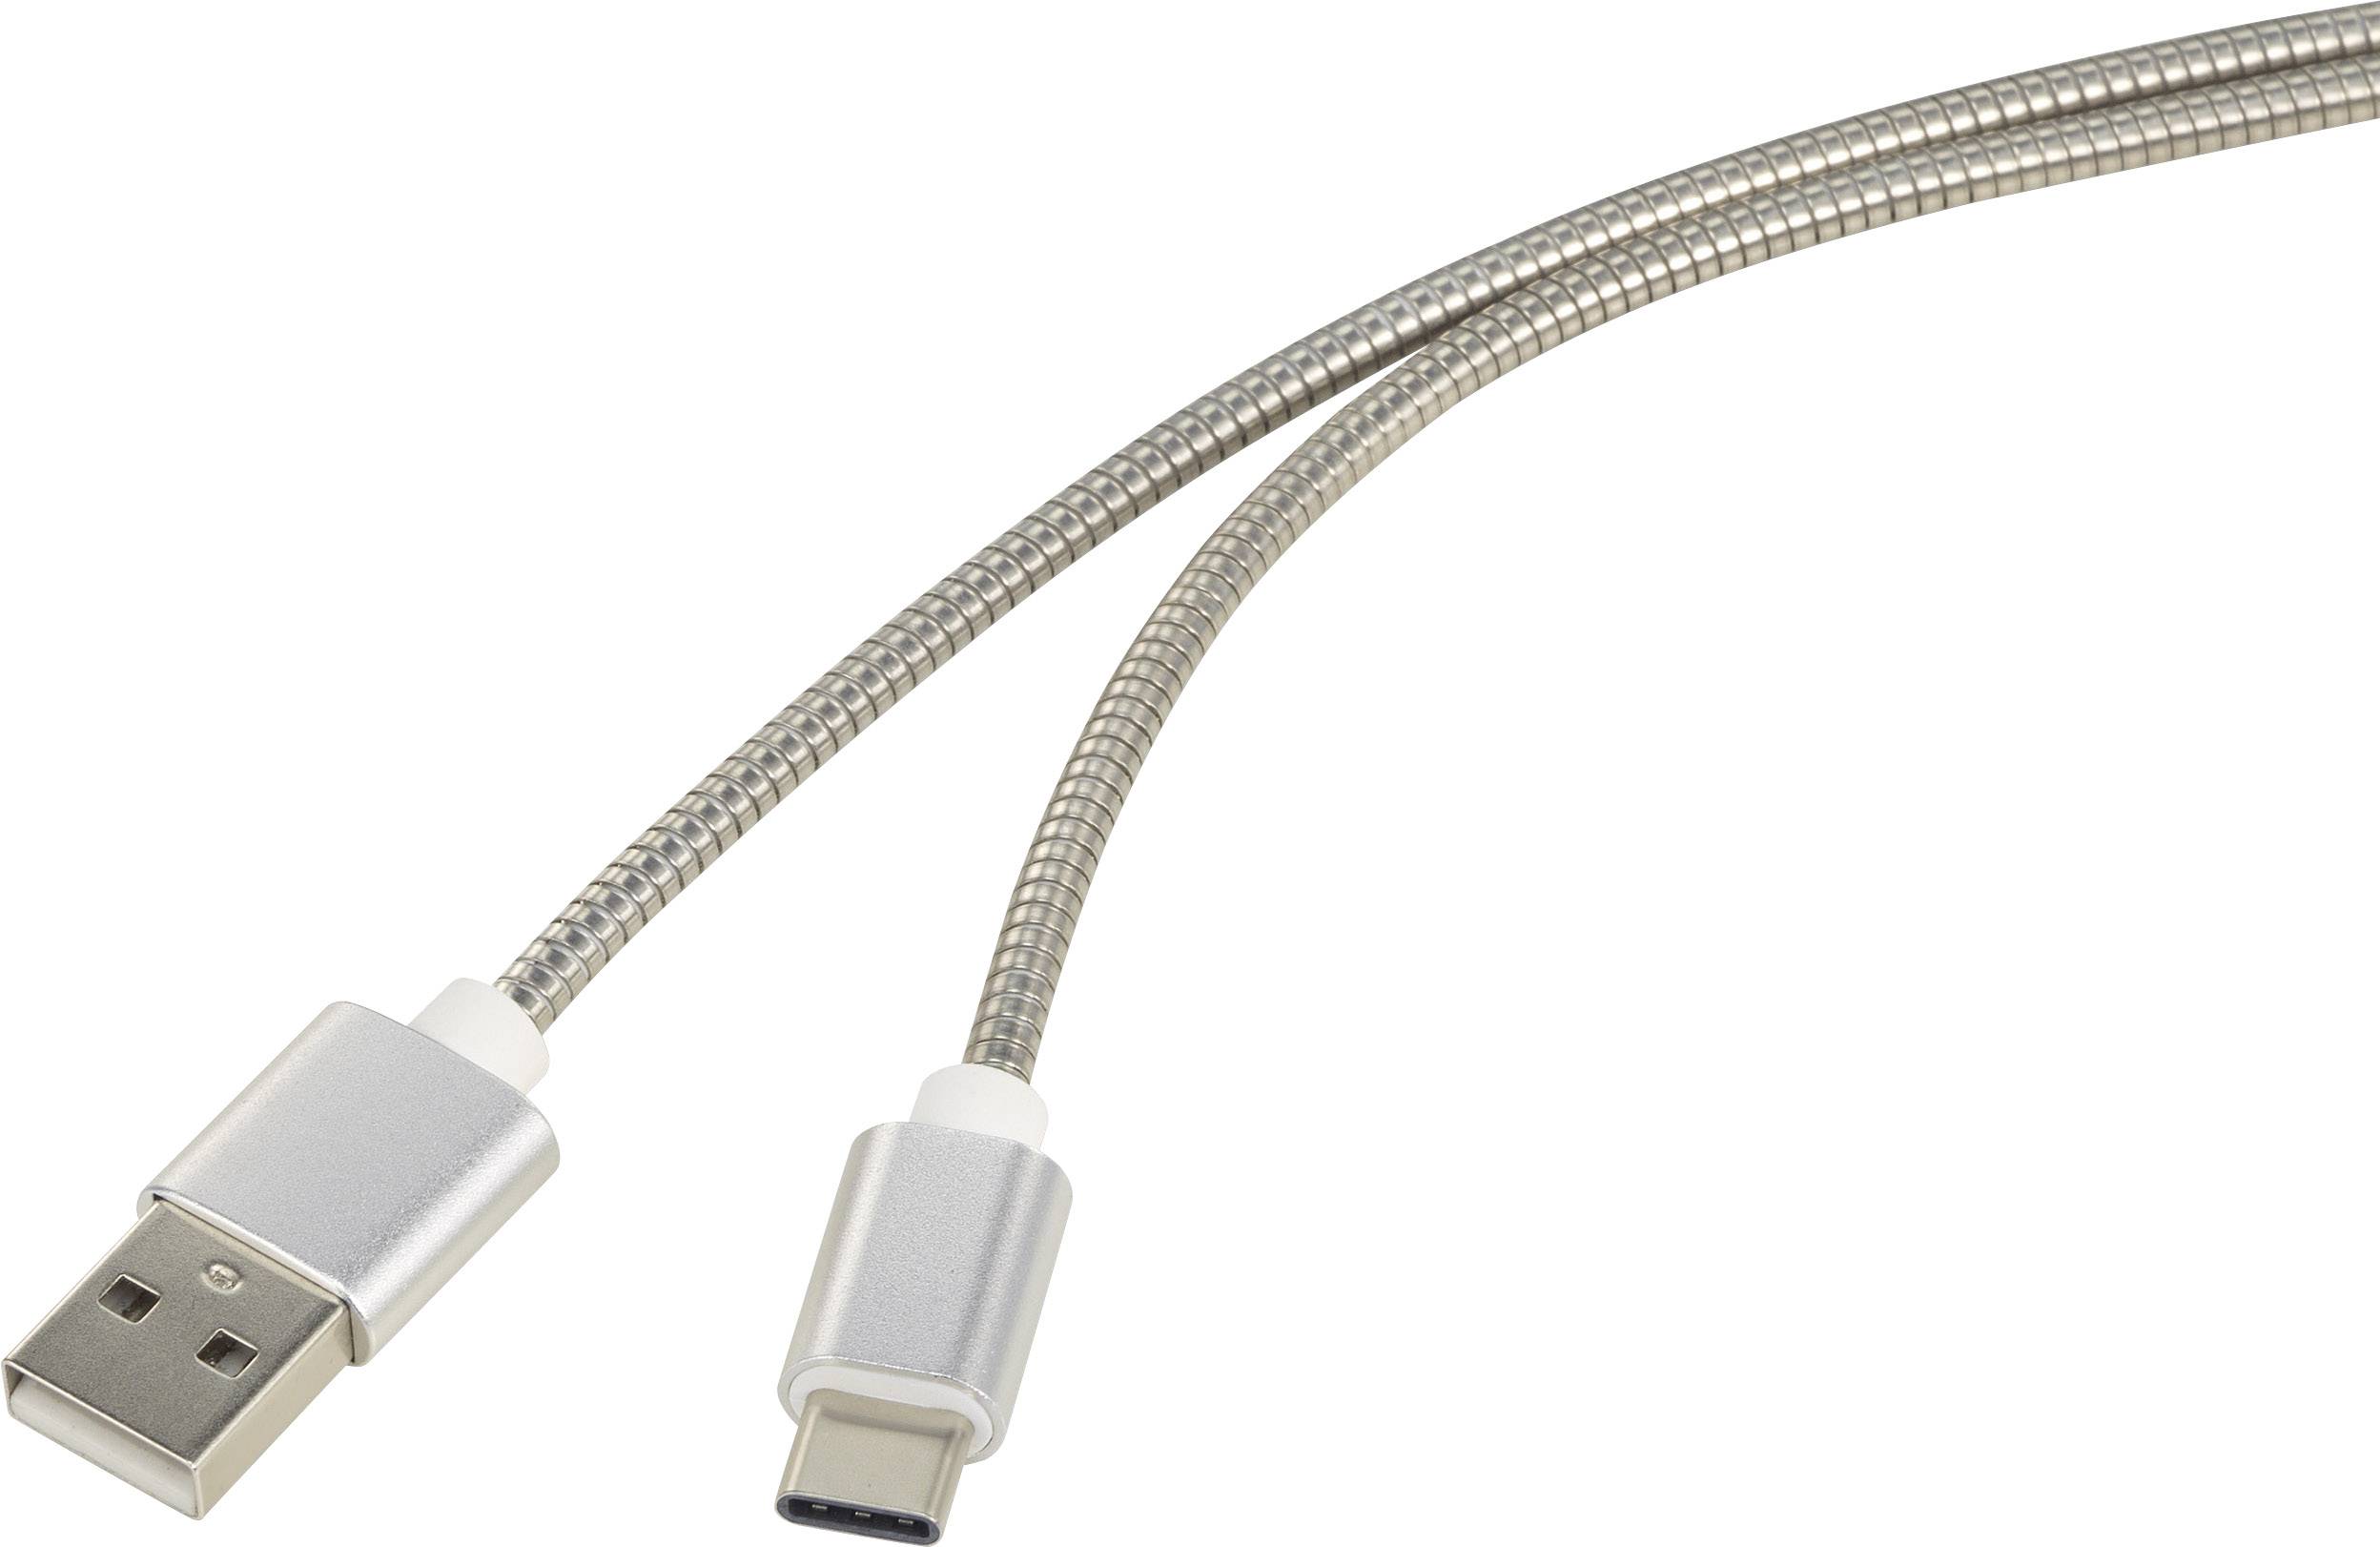 CONRAD Renkforce USB 2.0 Anschlusskabel [1x USB 2.0 Stecker A - 1x USB-C? Stecker] 0.5 m Silber Kabe